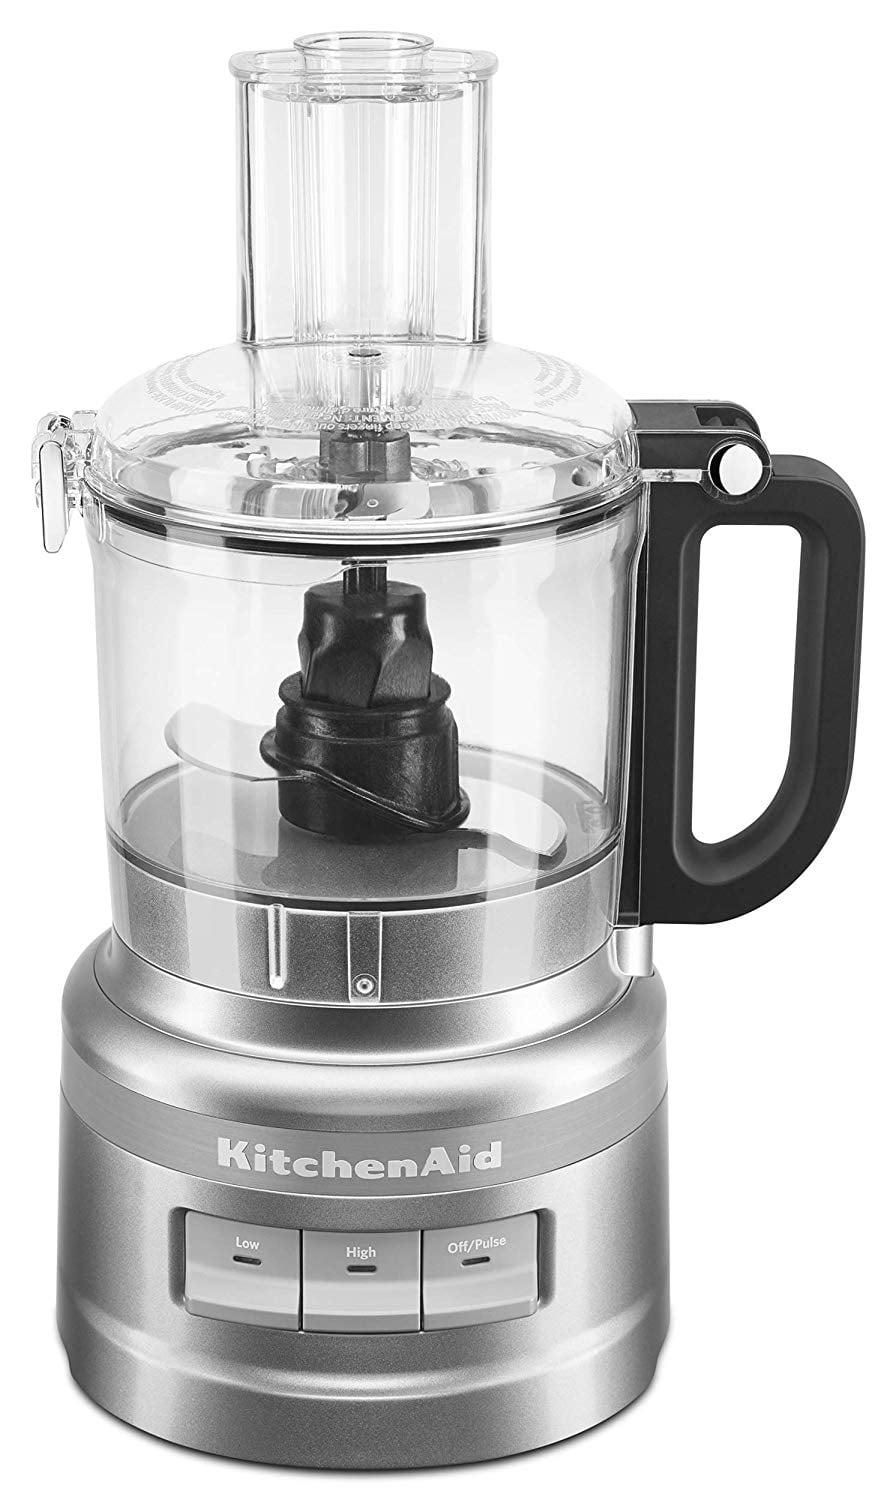 KitchenAid 7 Cup (1,660 ML) Food Processor / Chopper, 220 V with